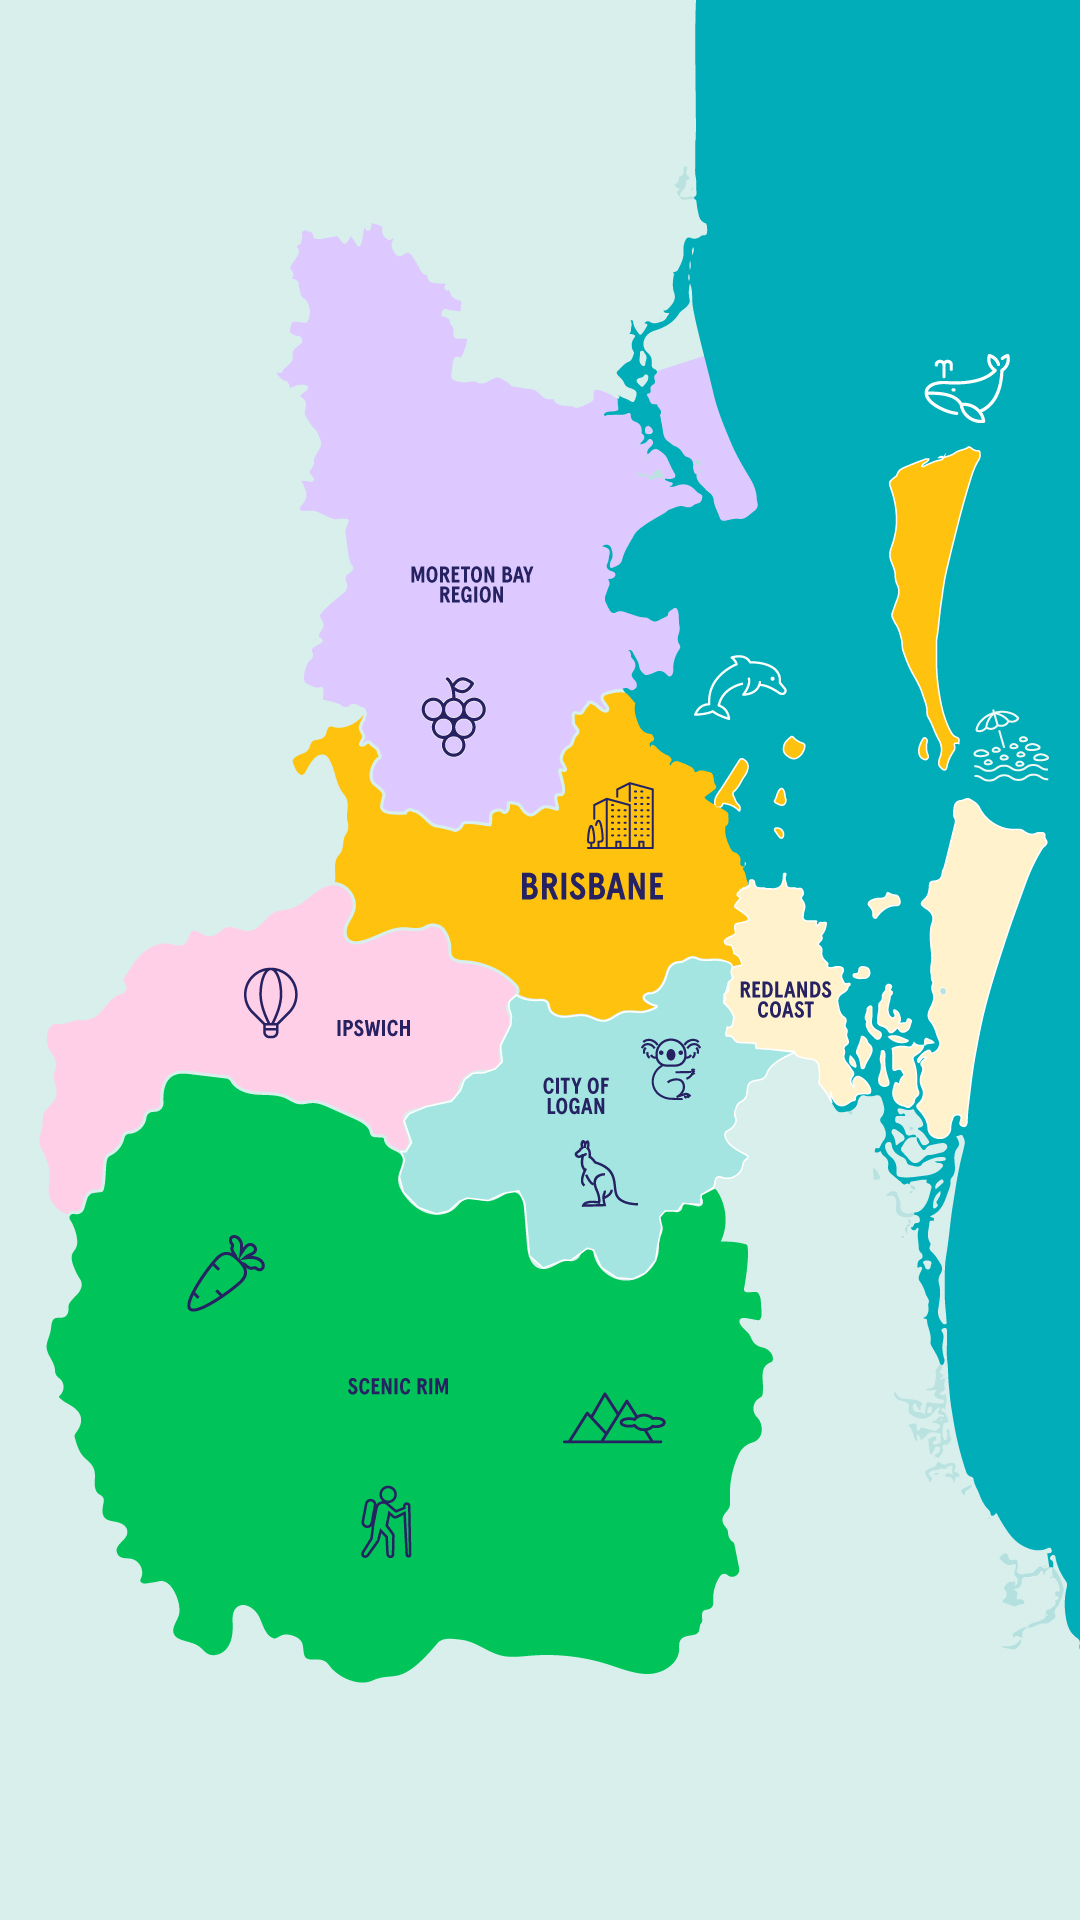 Brisbane region map - mobile spec